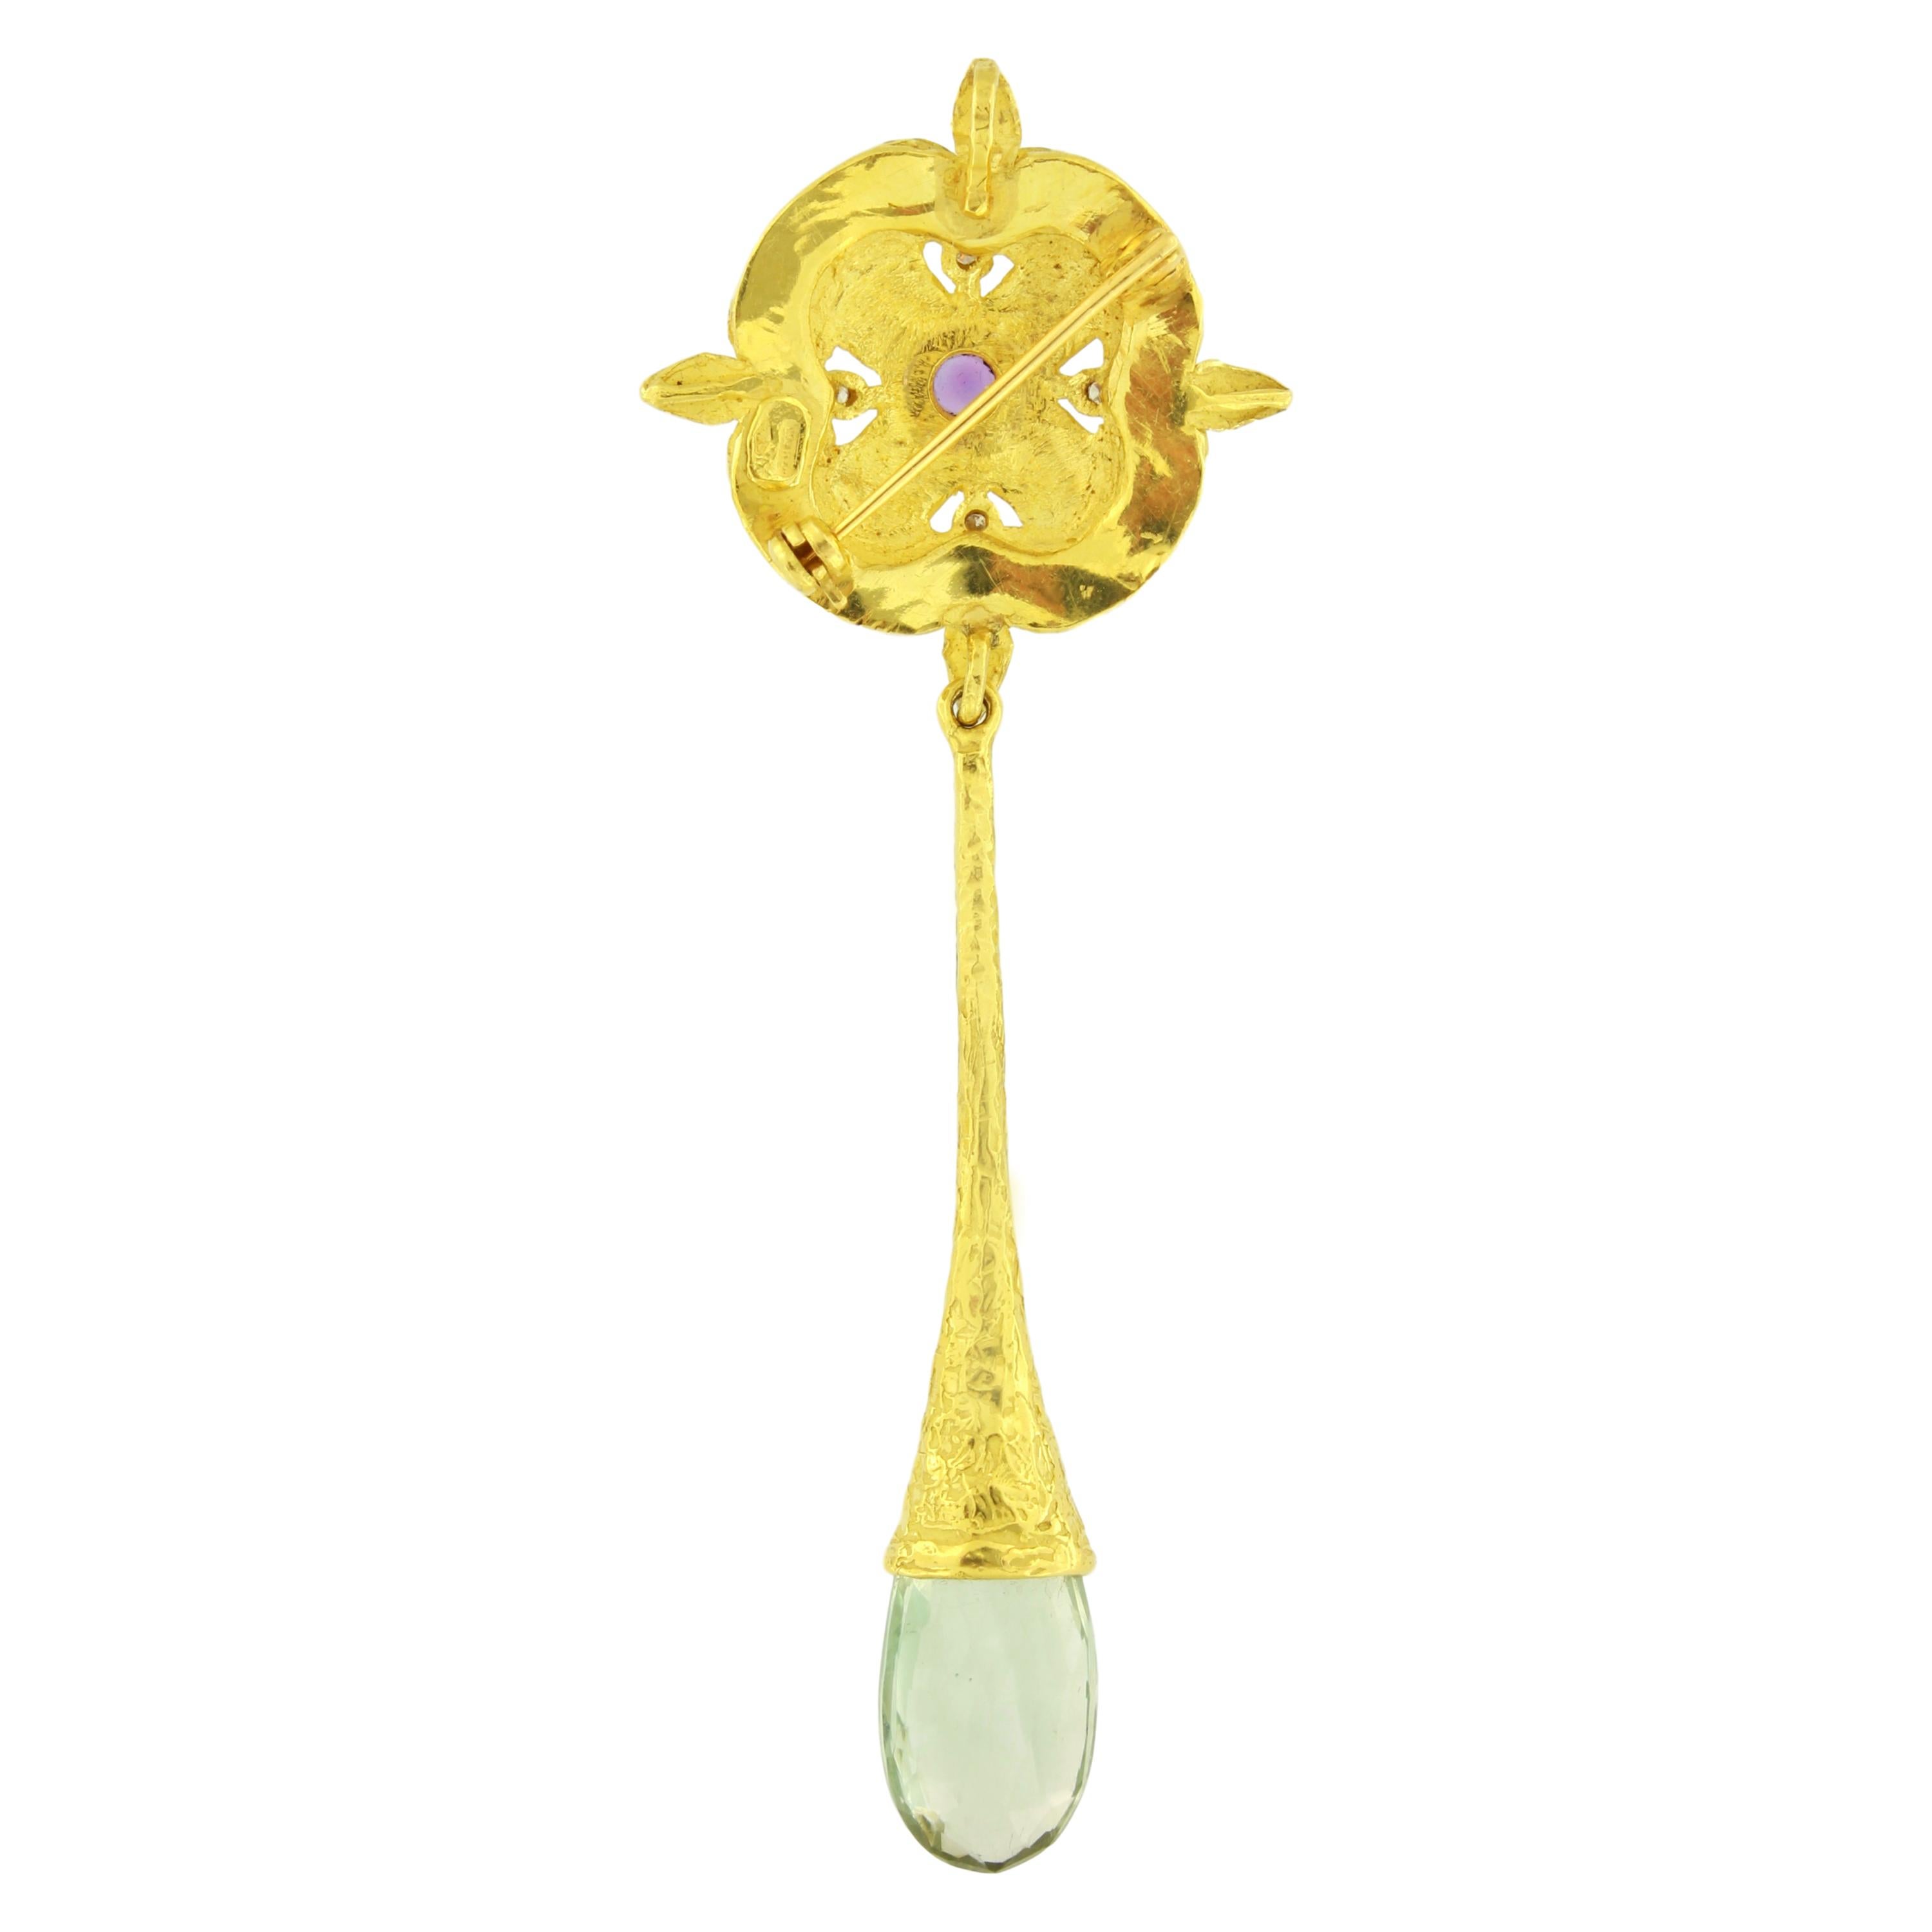 Contemporain Broche en or jaune 18 carats avec pierres précieuses multicolores « Burlesque » de Sacchi en vente